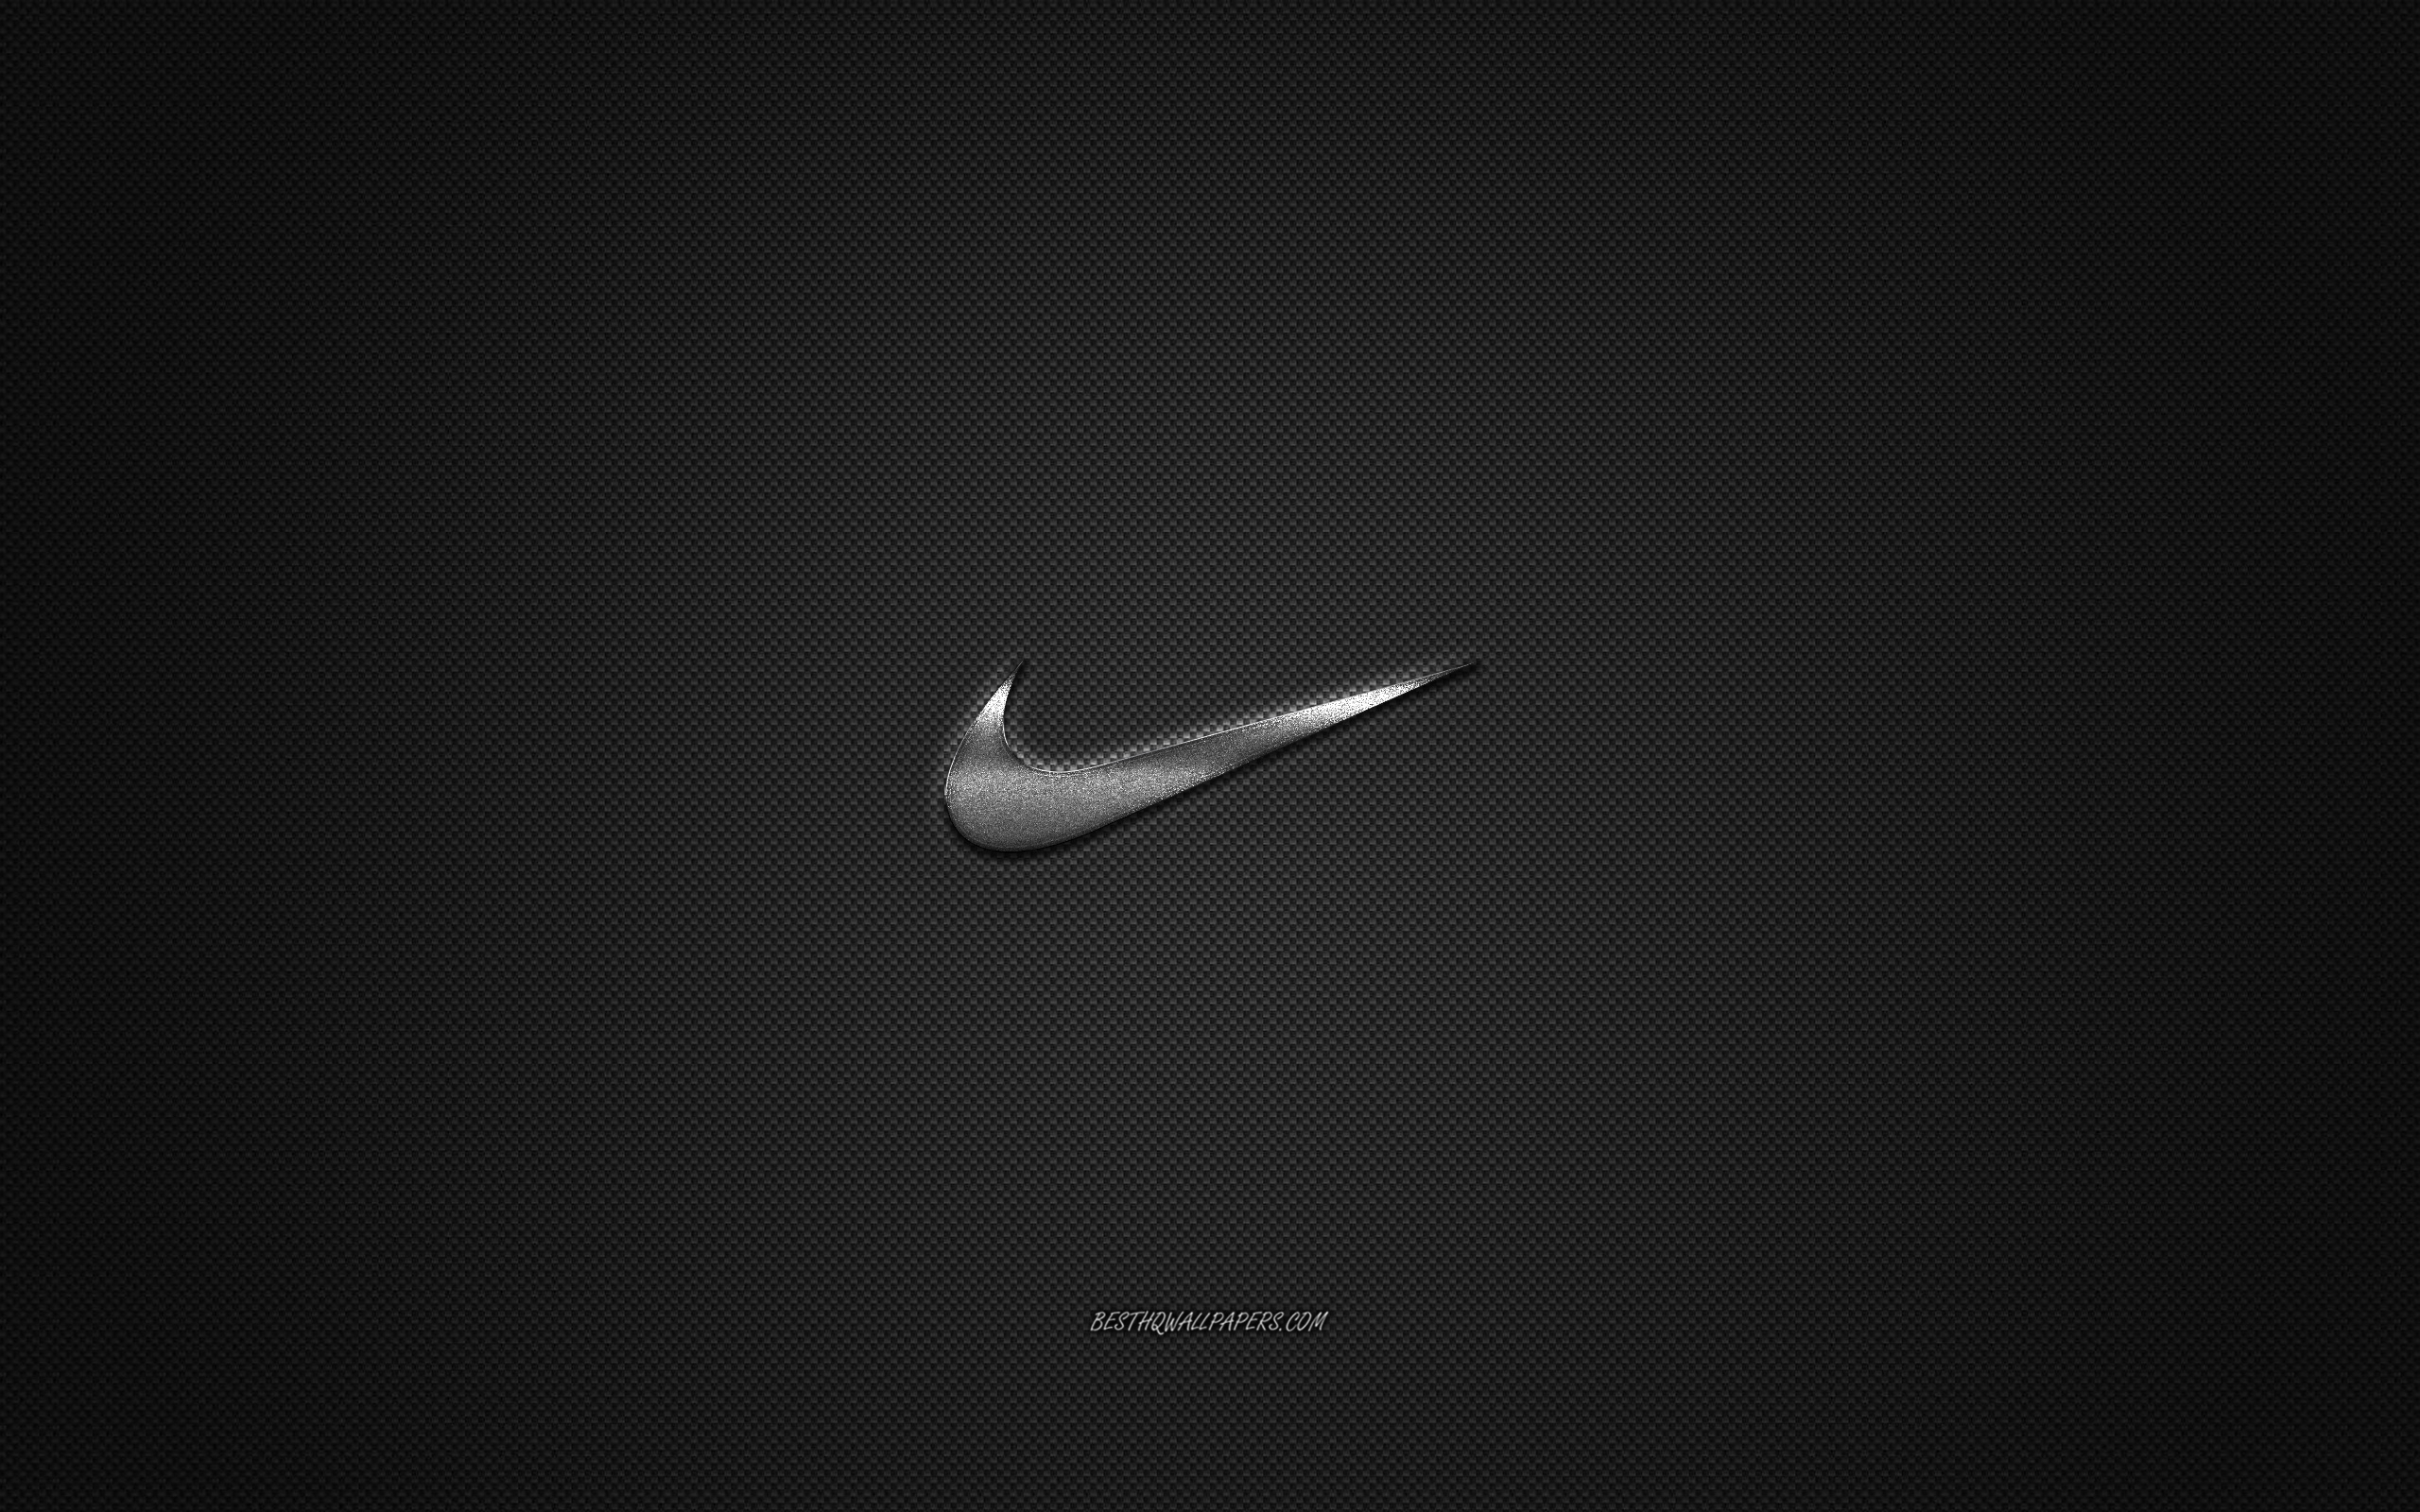 Download wallpaper Nike logo, metal emblem, apparel brand, black carbon texture, global apparel brands, Nike, fashion concept, Nike emblem, Just do it for desktop with resolution 2560x1600. High Quality HD picture wallpaper